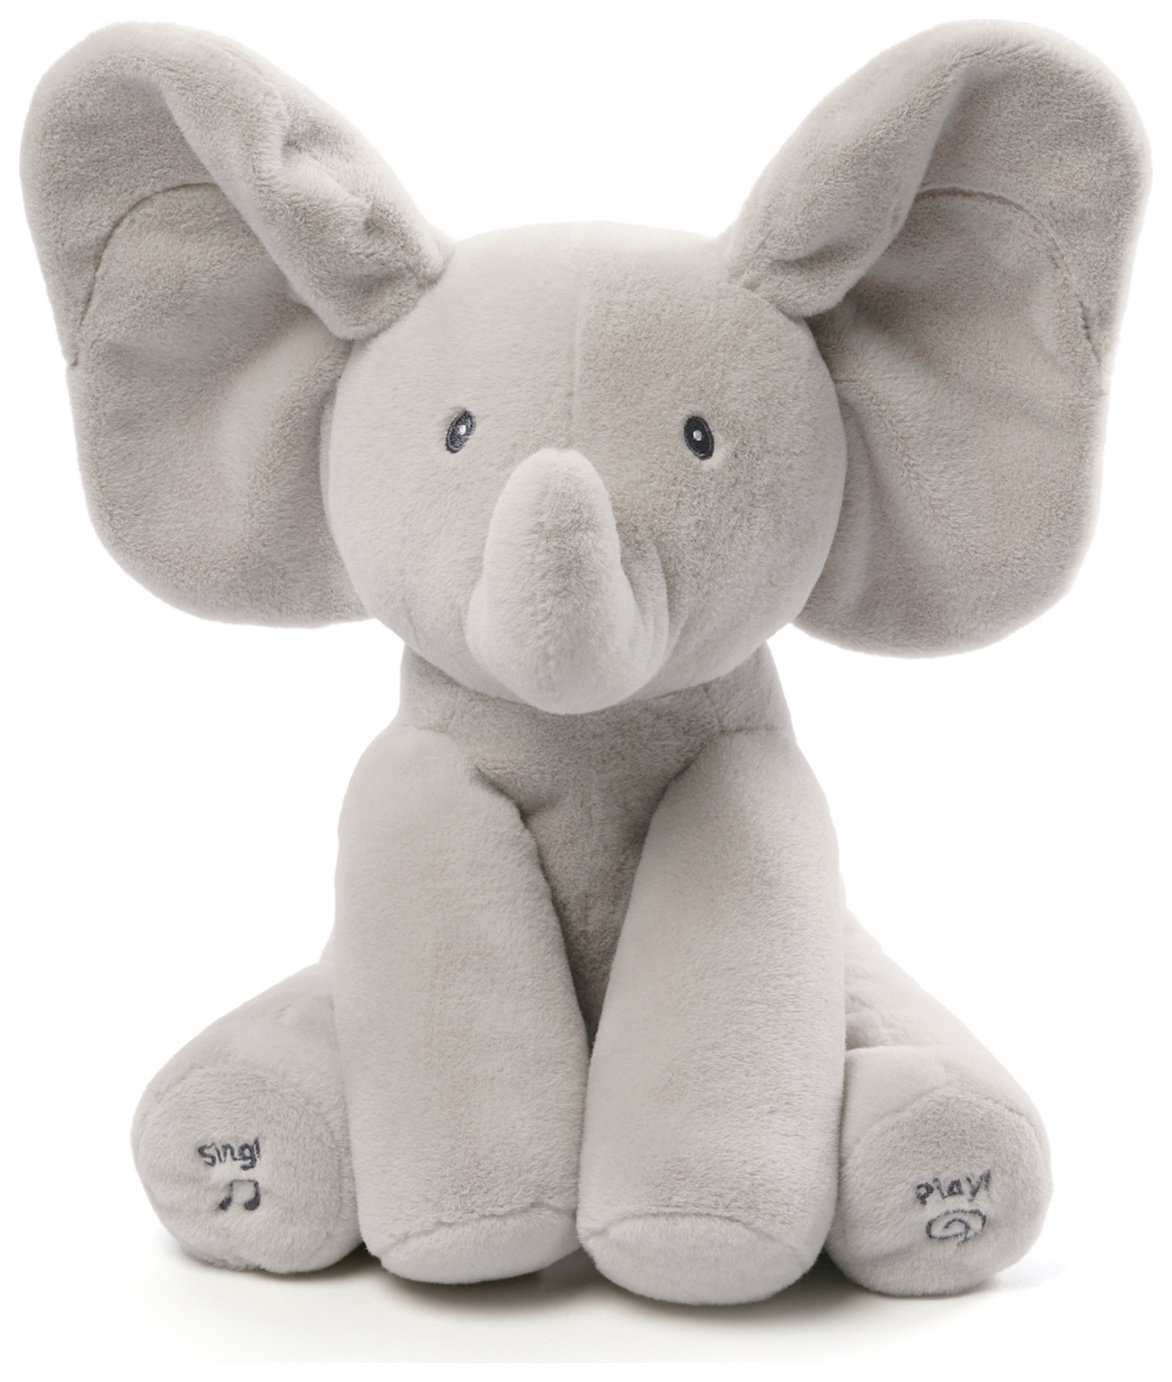 small elephant toy